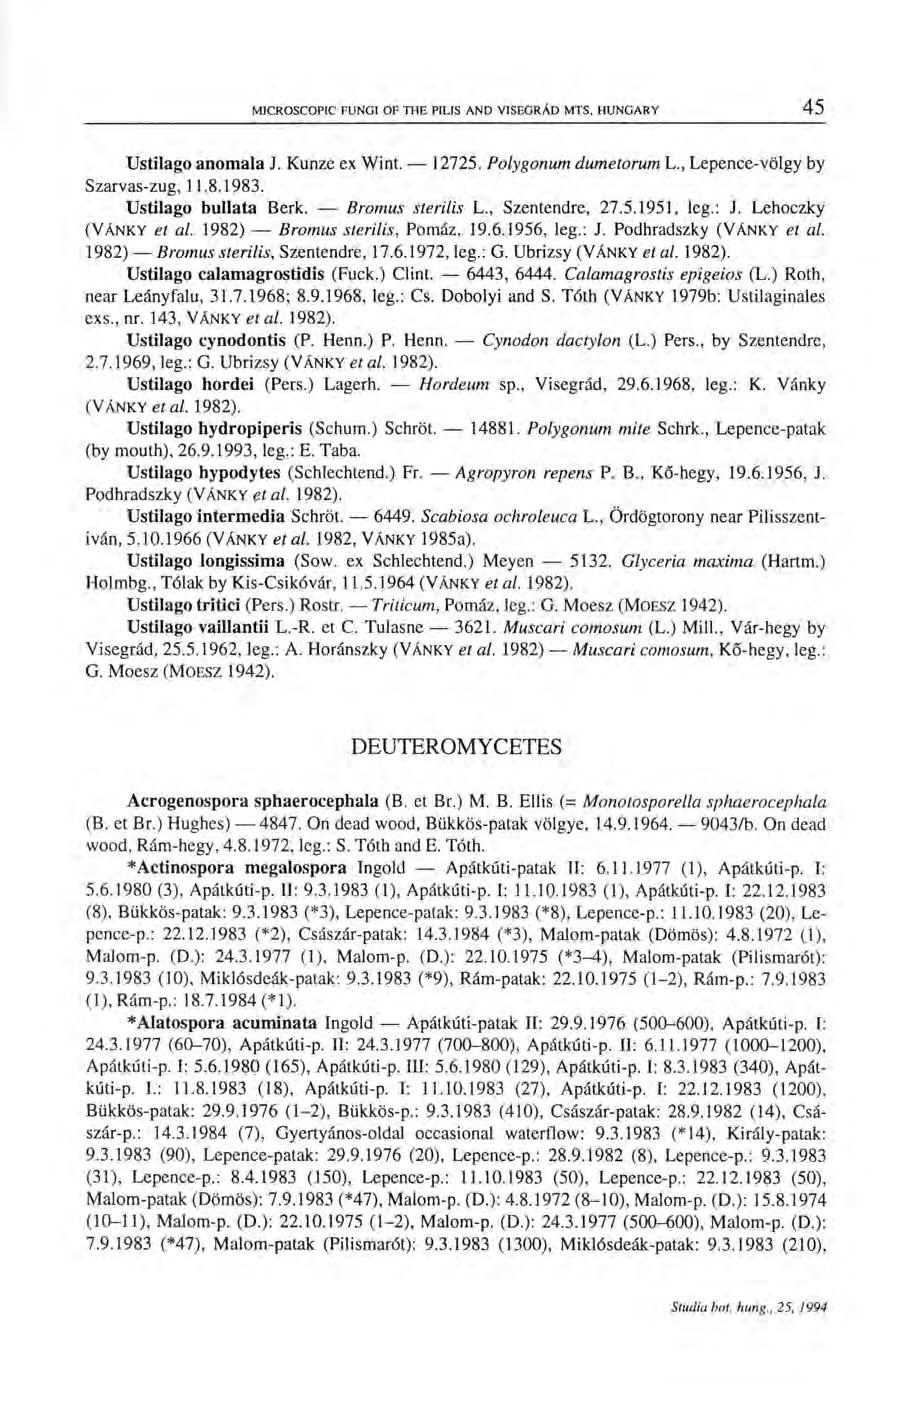 Ustilago anomala J. Kunze ex Wint. 12725. Polygonum dumetorum L., Lepence-völgy by Szarvas-zug, 11.8.1983. Ustilago bullata Berk. Bromus sterilis L., Szentendre, 27.5.1951, leg.: J.